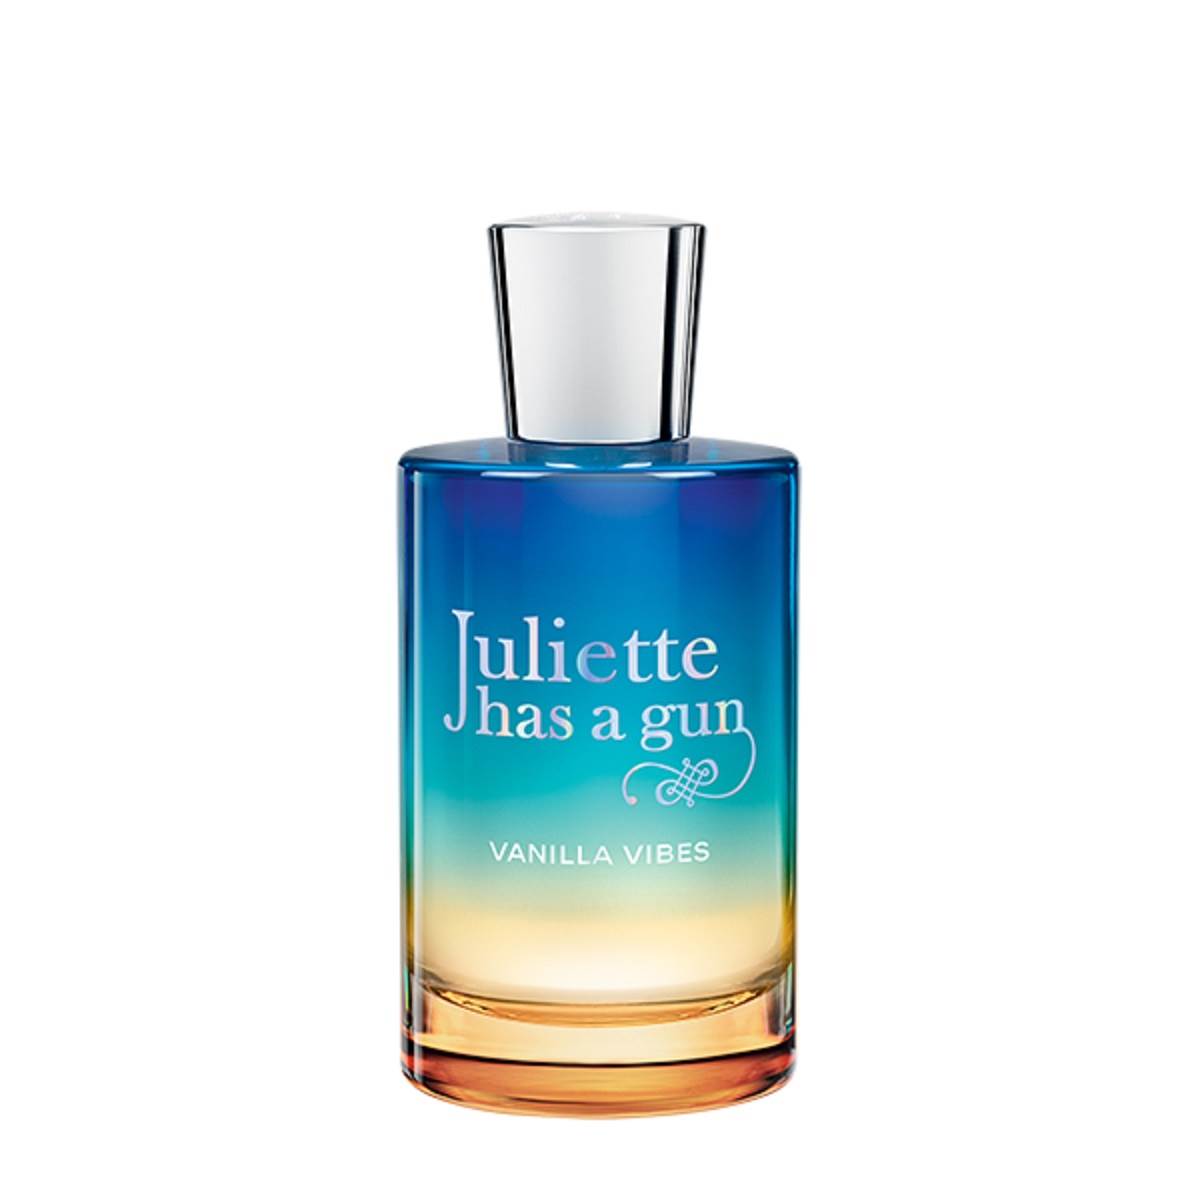  Juliette has a gun miriše na plažu. 